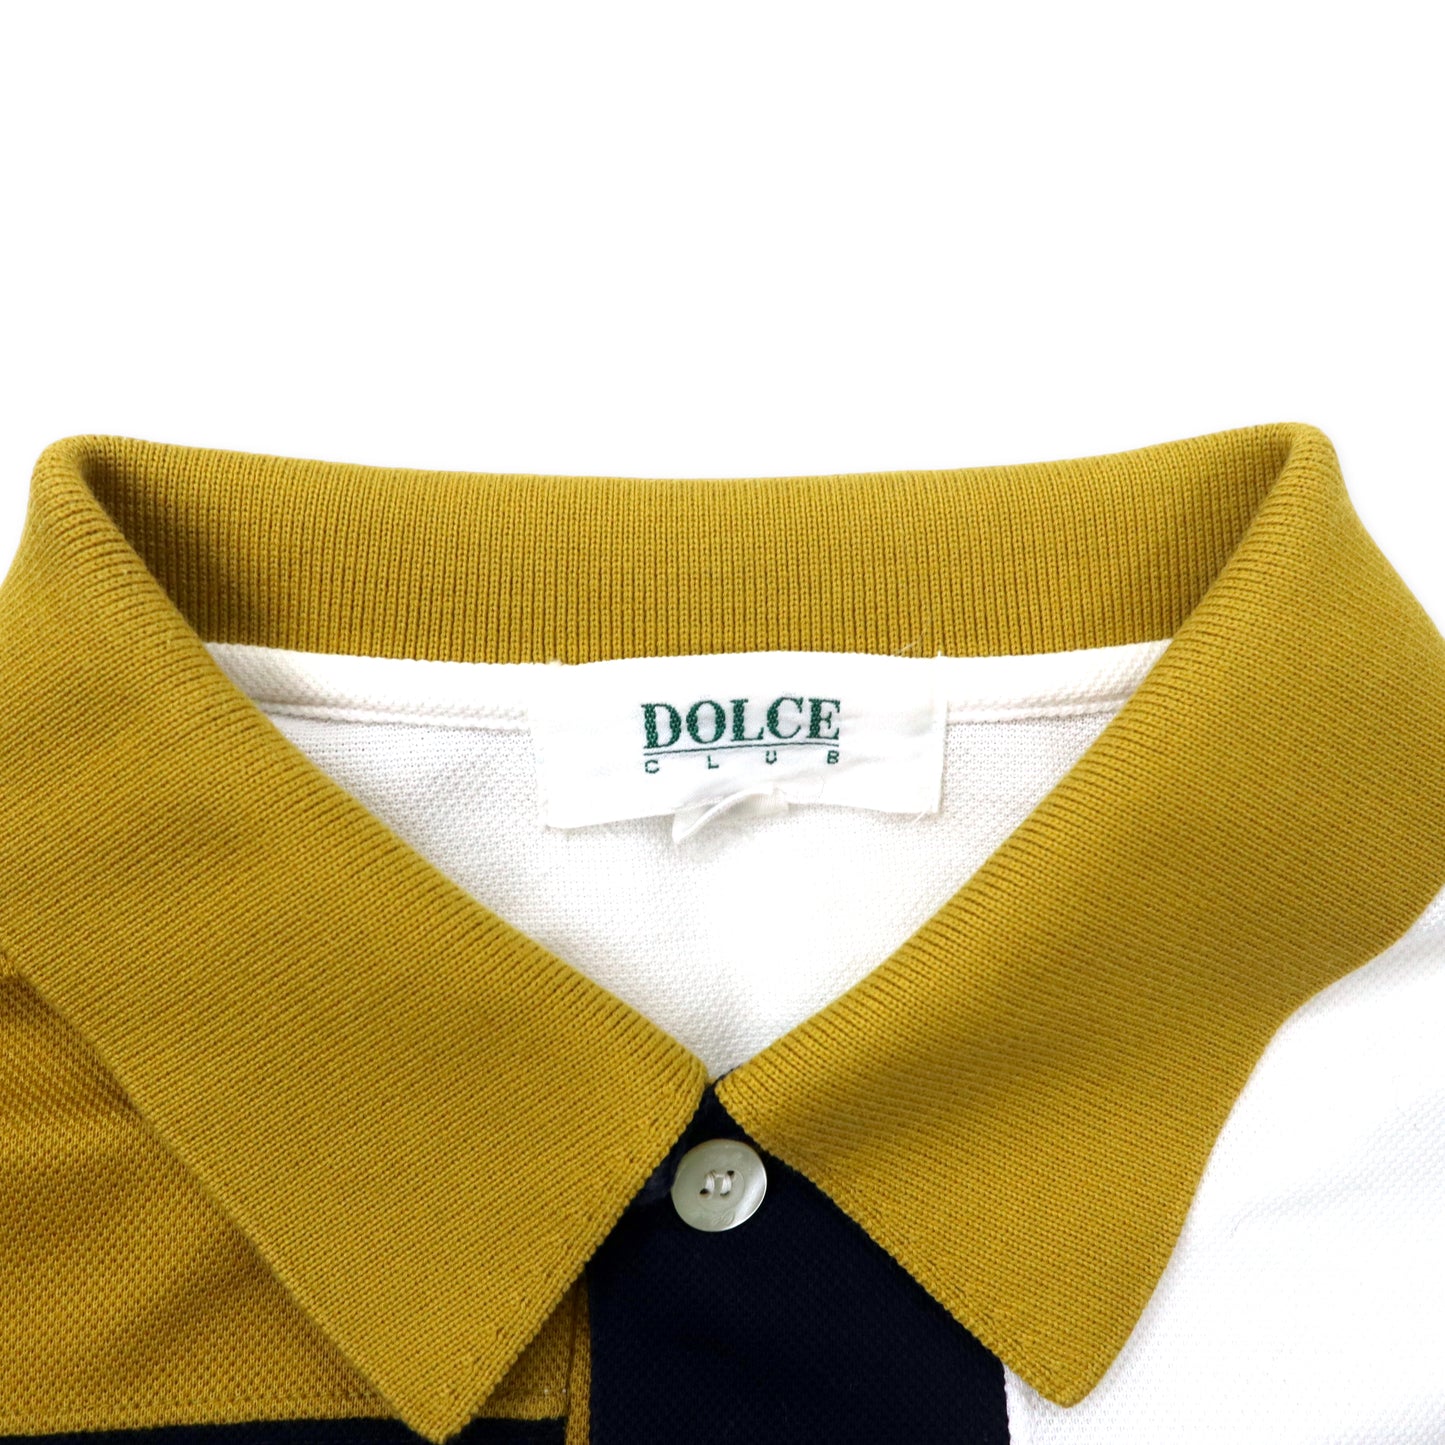 DOLCE CLUB 90年代 ポロシャツ 48 マルチカラー コットン 犬 キャラクター 日本製